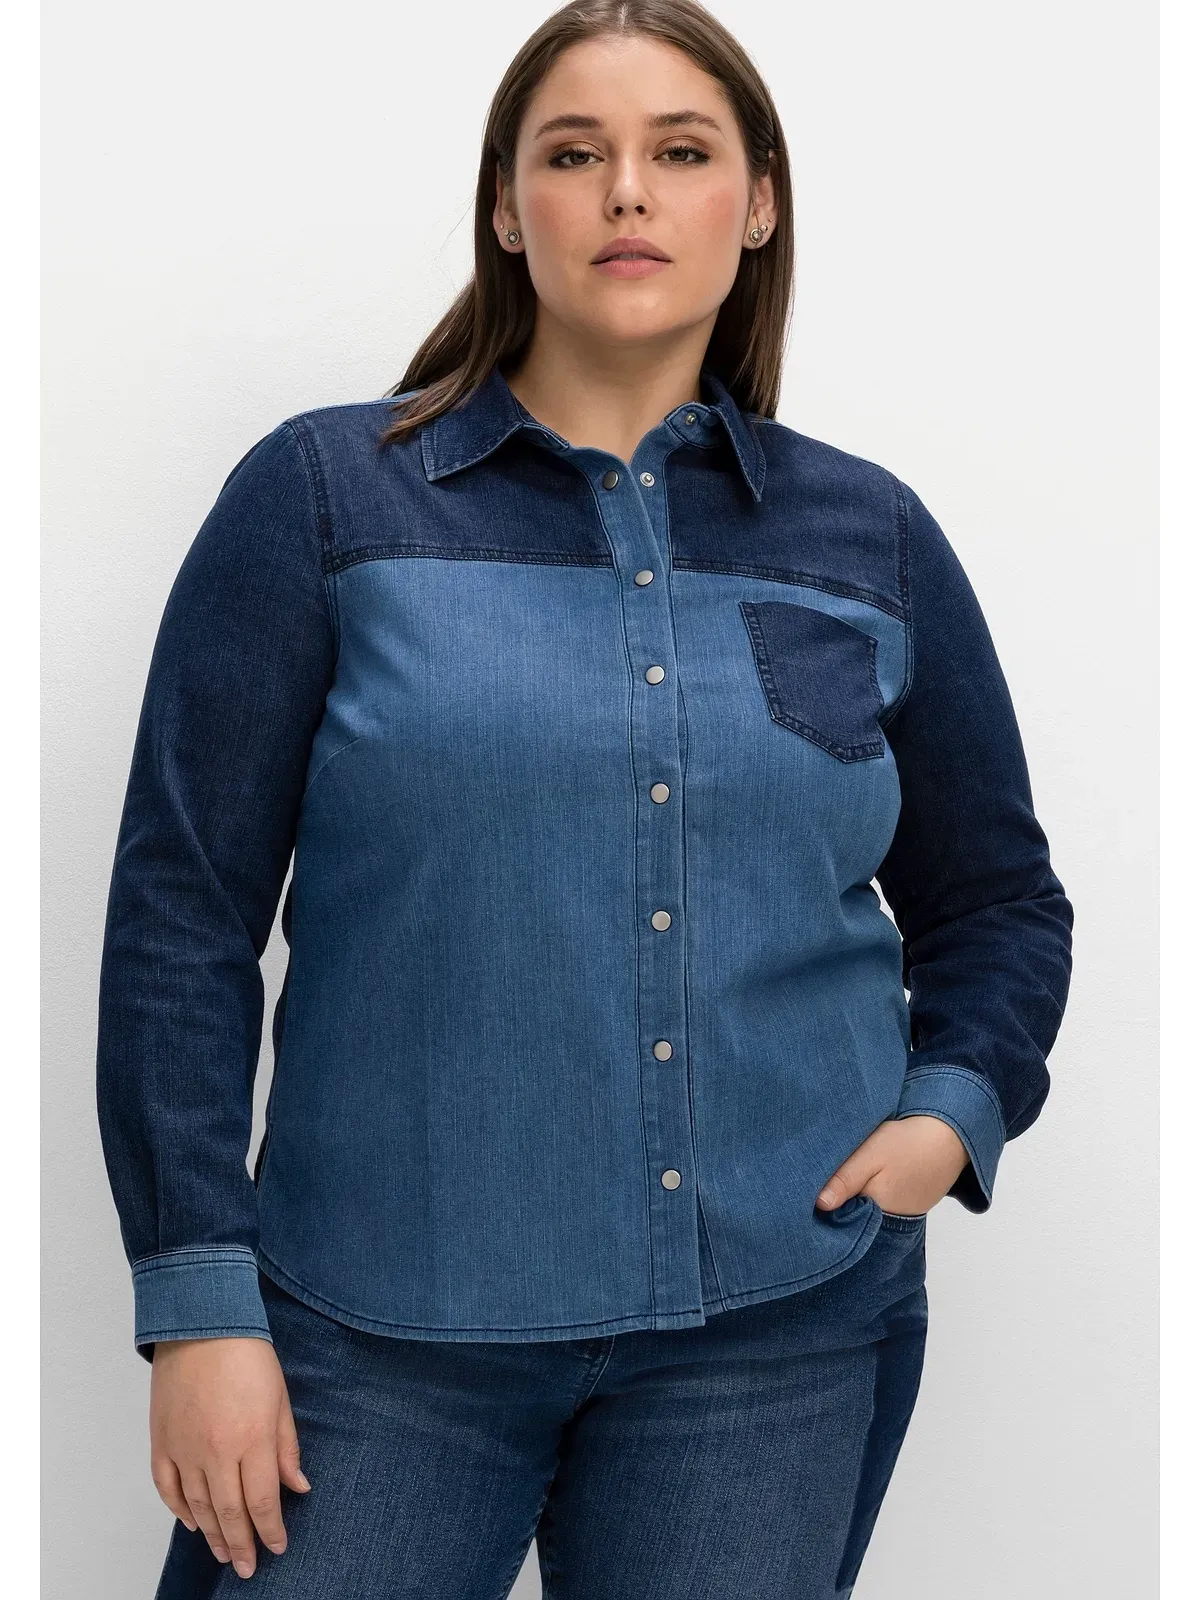 Jeansbluse SHEEGO "Große Größen" Gr. 56, blau (blue denim) Damen Blusen langarm